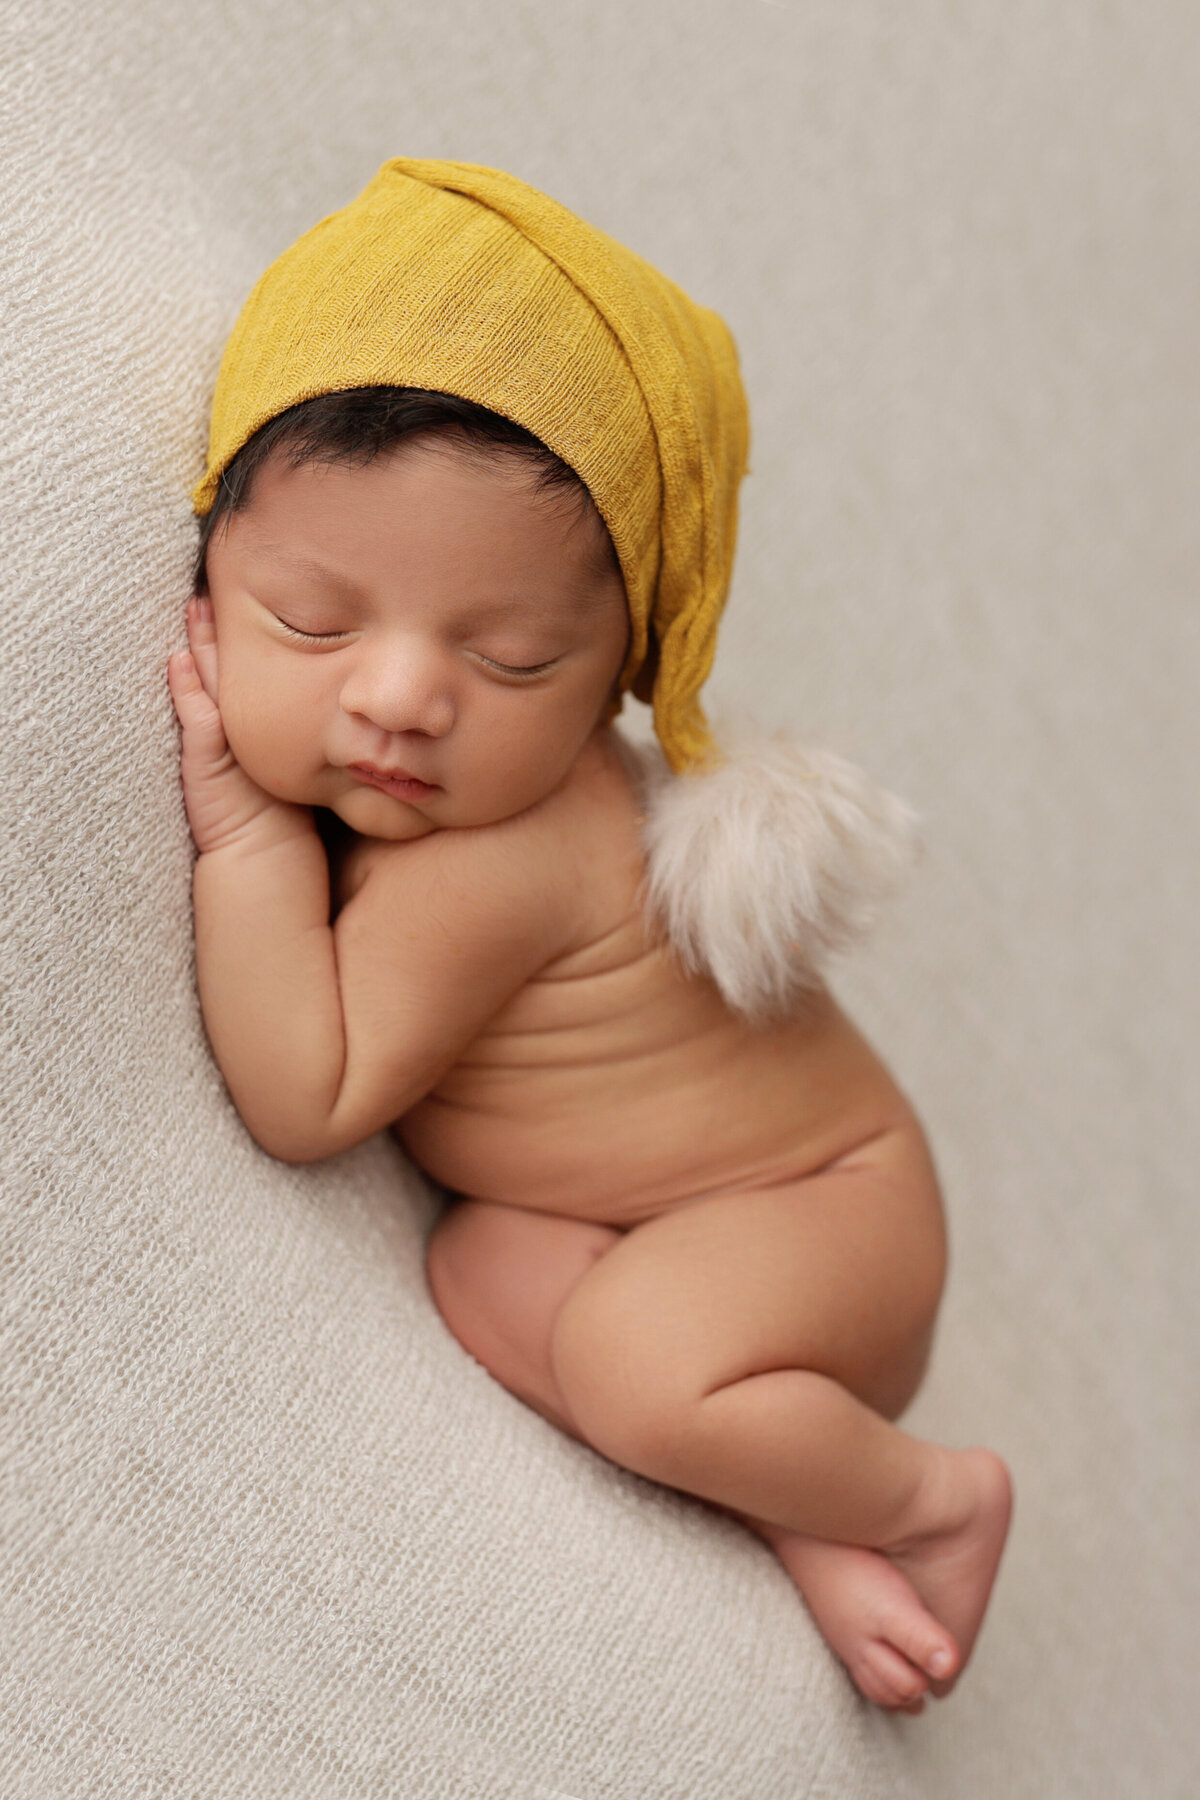 newborn baby boy sleeping on a cream blanket wearing a yellow hat